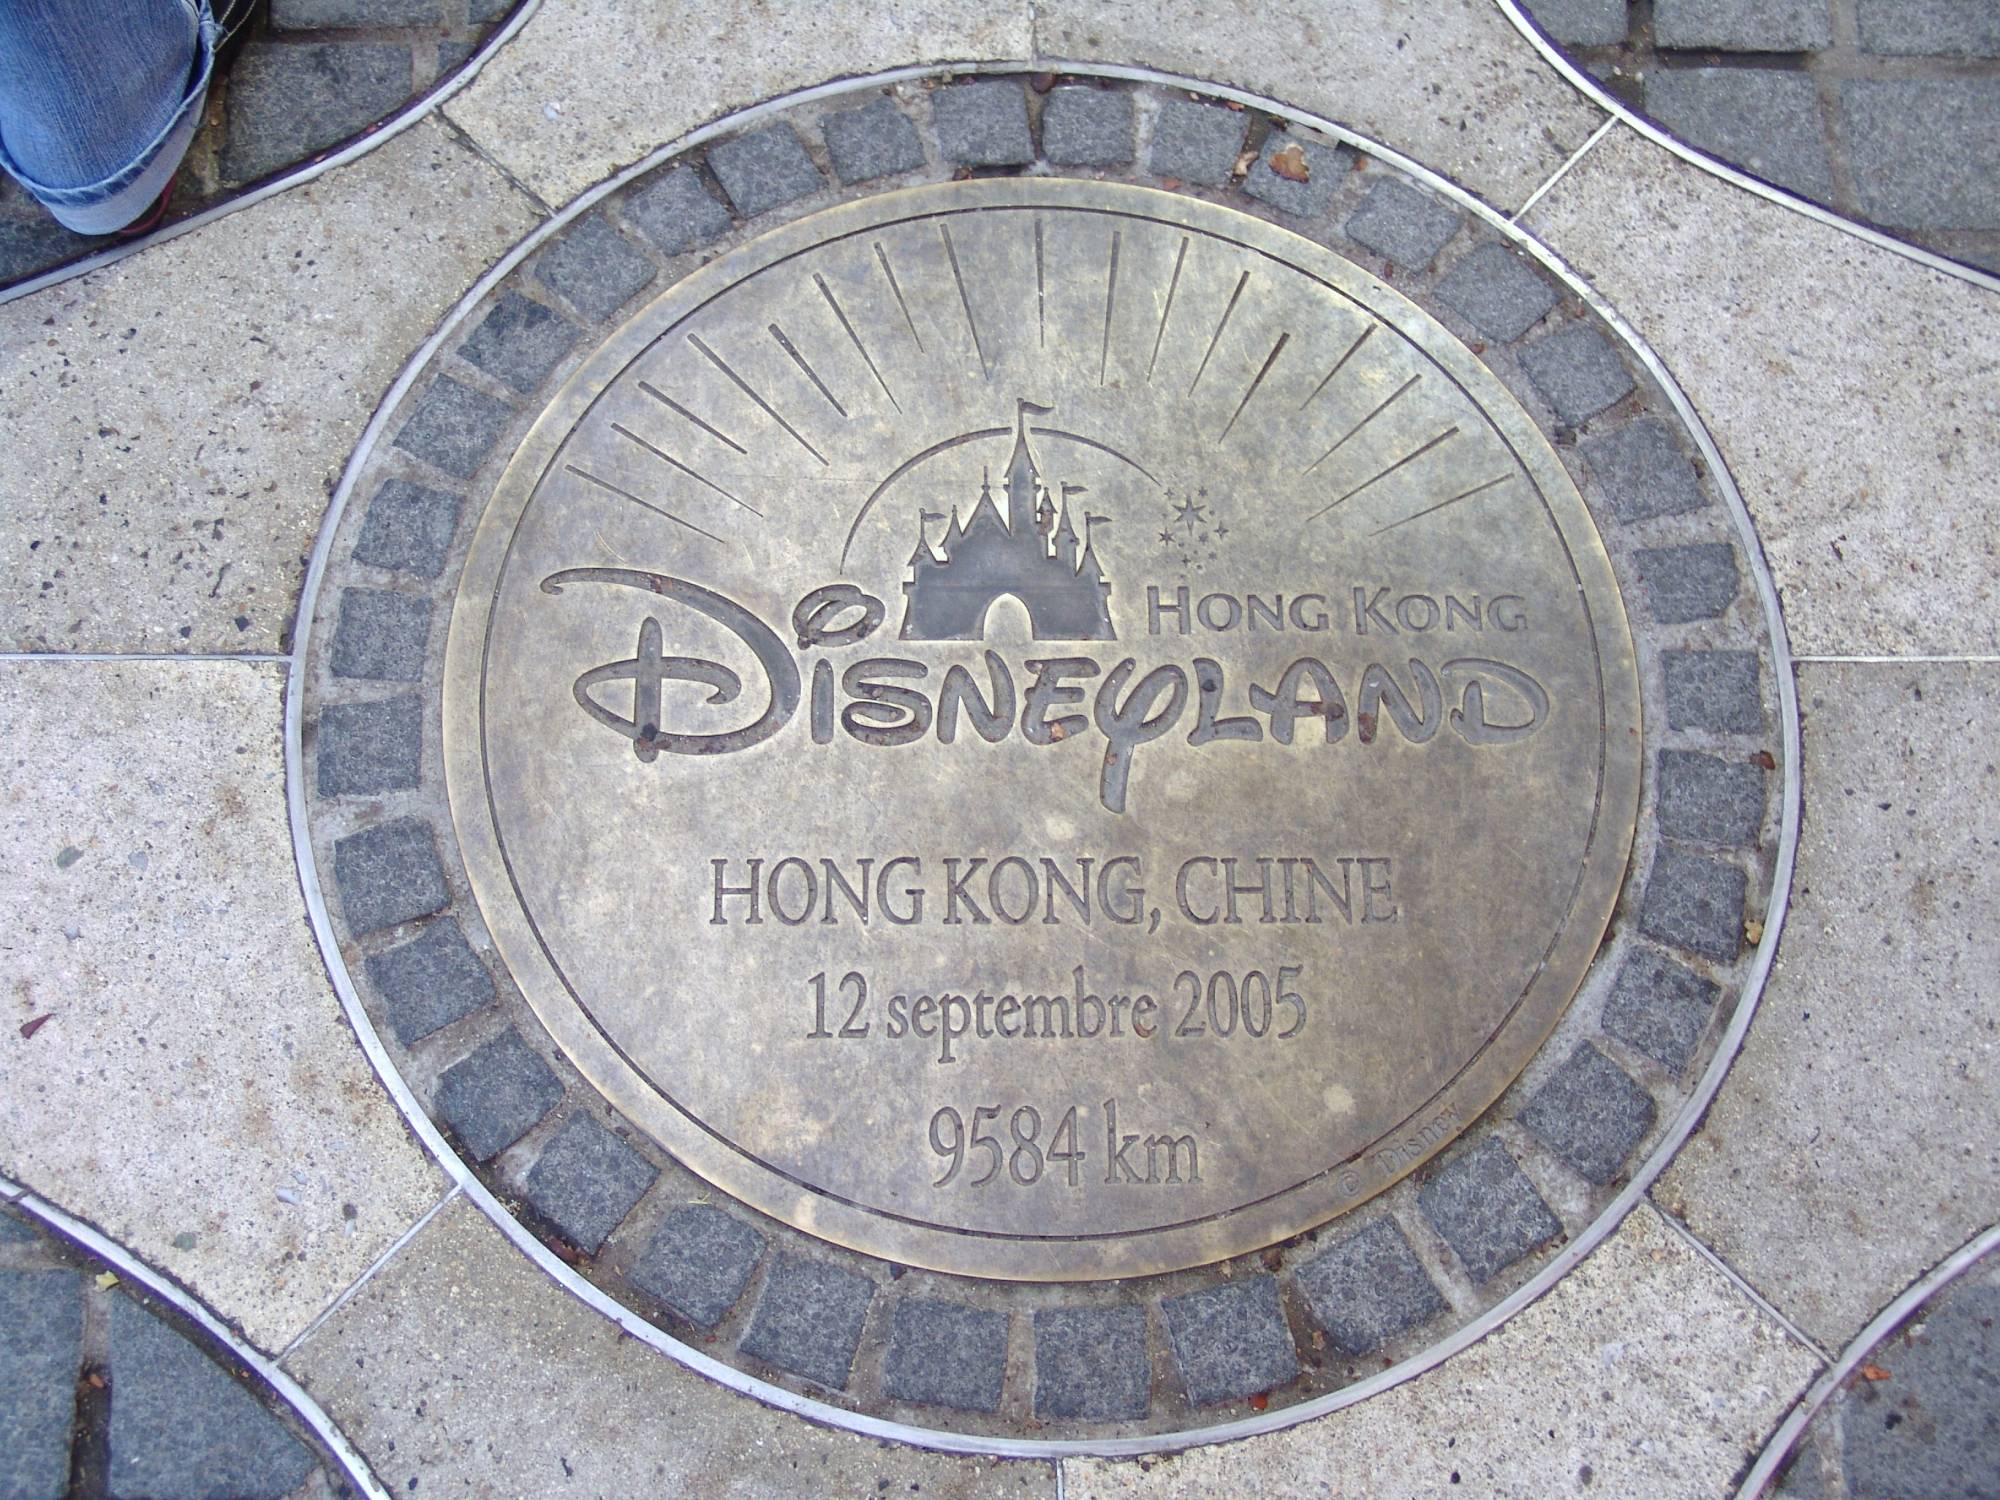 Disneyland Paris - plaques for other Disney parks